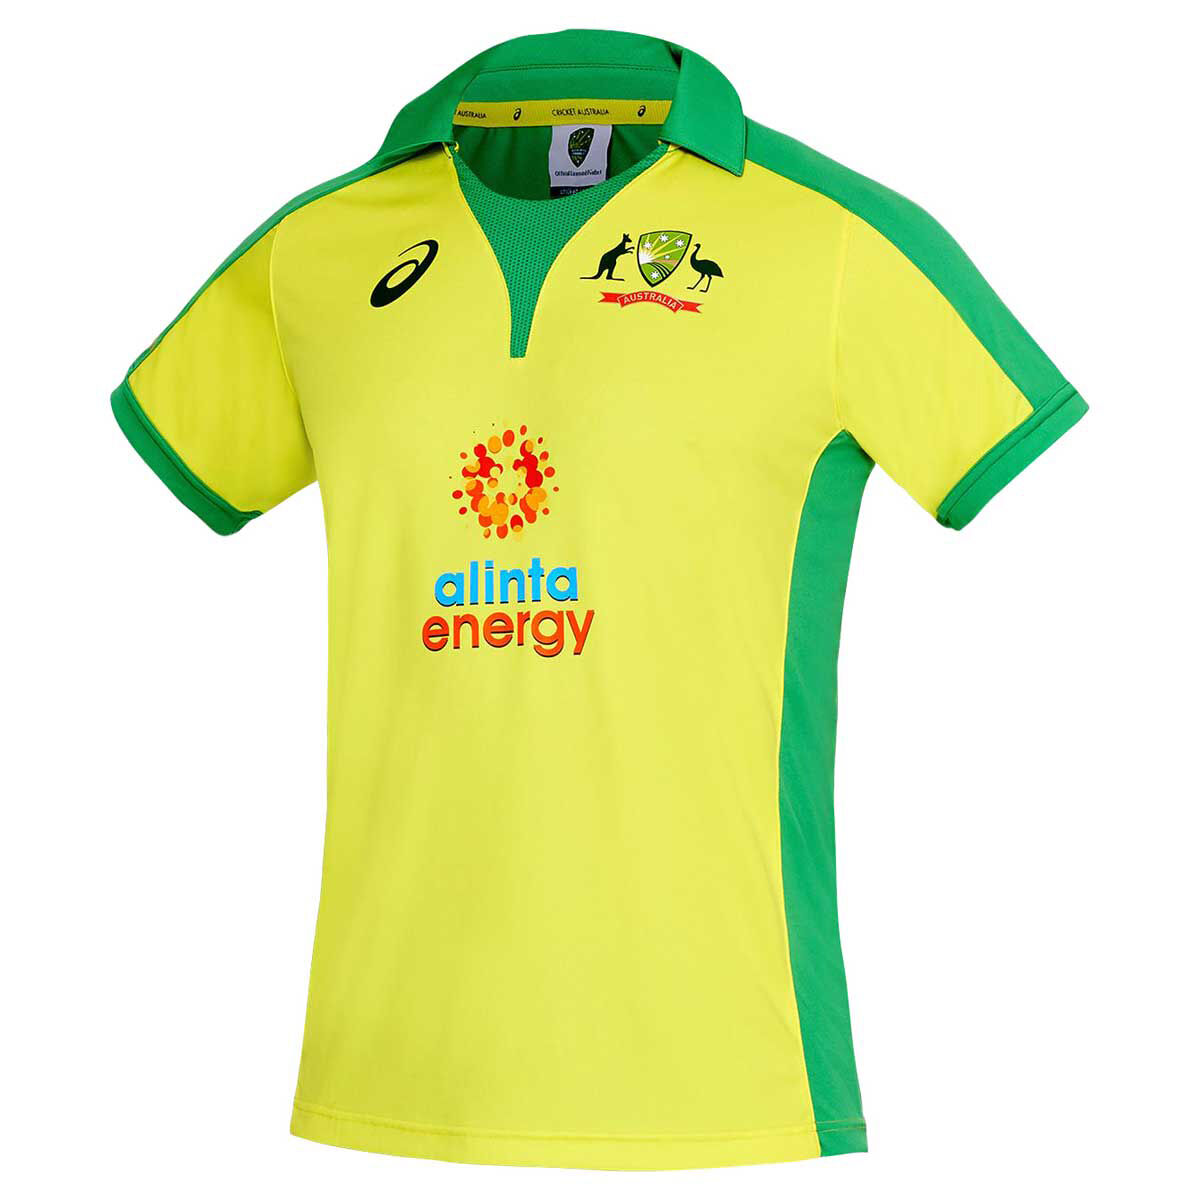 australia cricket jersey 2020